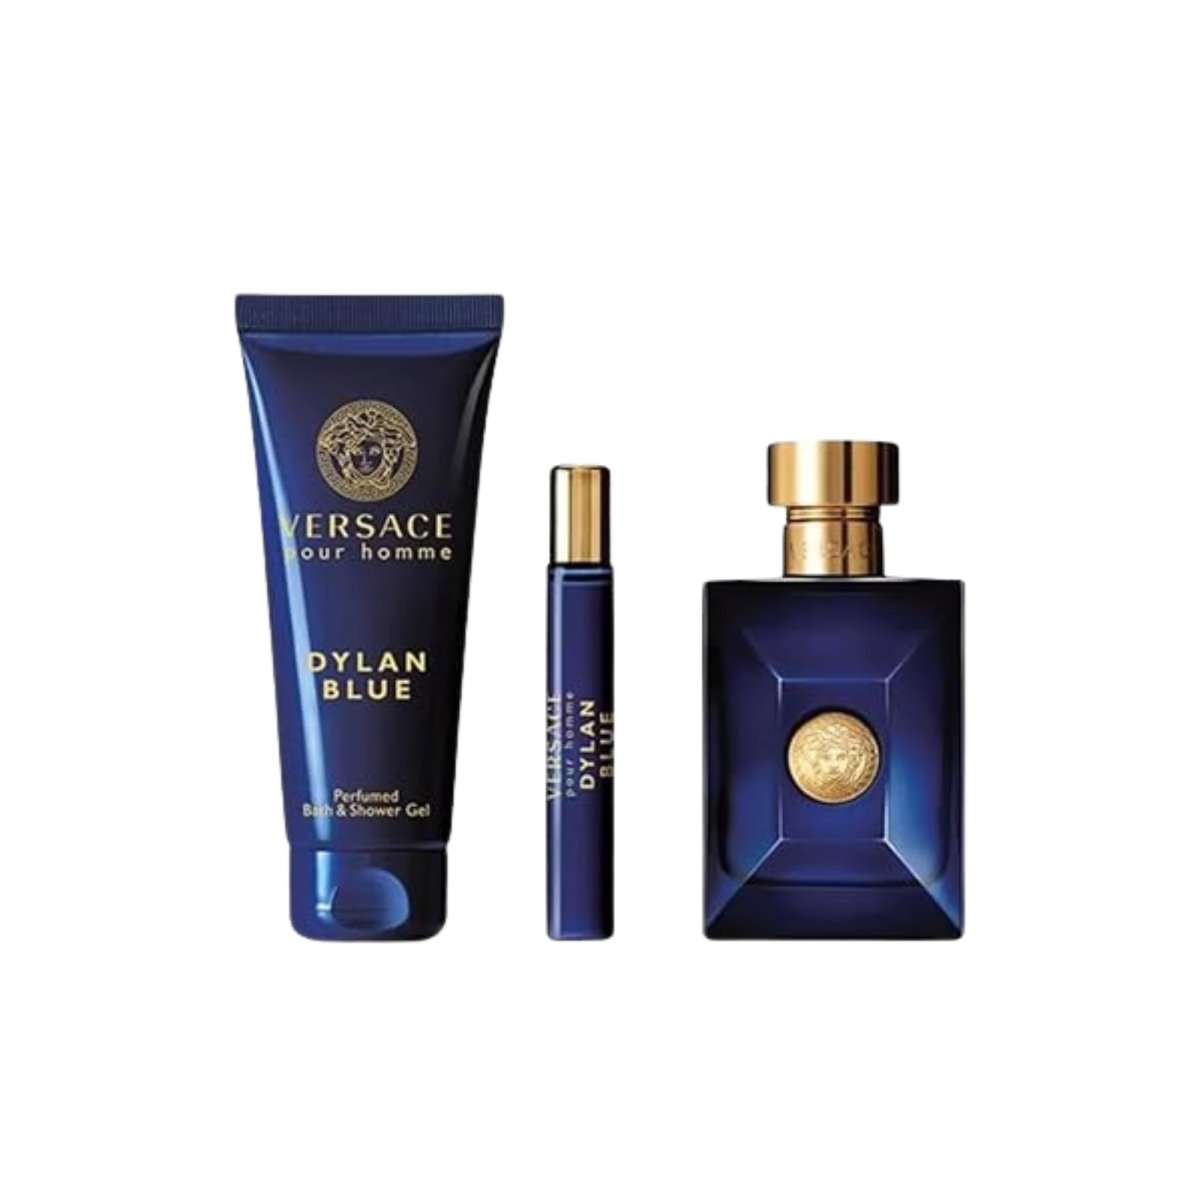 Versace Men's Dylan Blue Gift Set Fragrances 3 PC Set Barcode: 8011003879373 - Versace - Gift Set